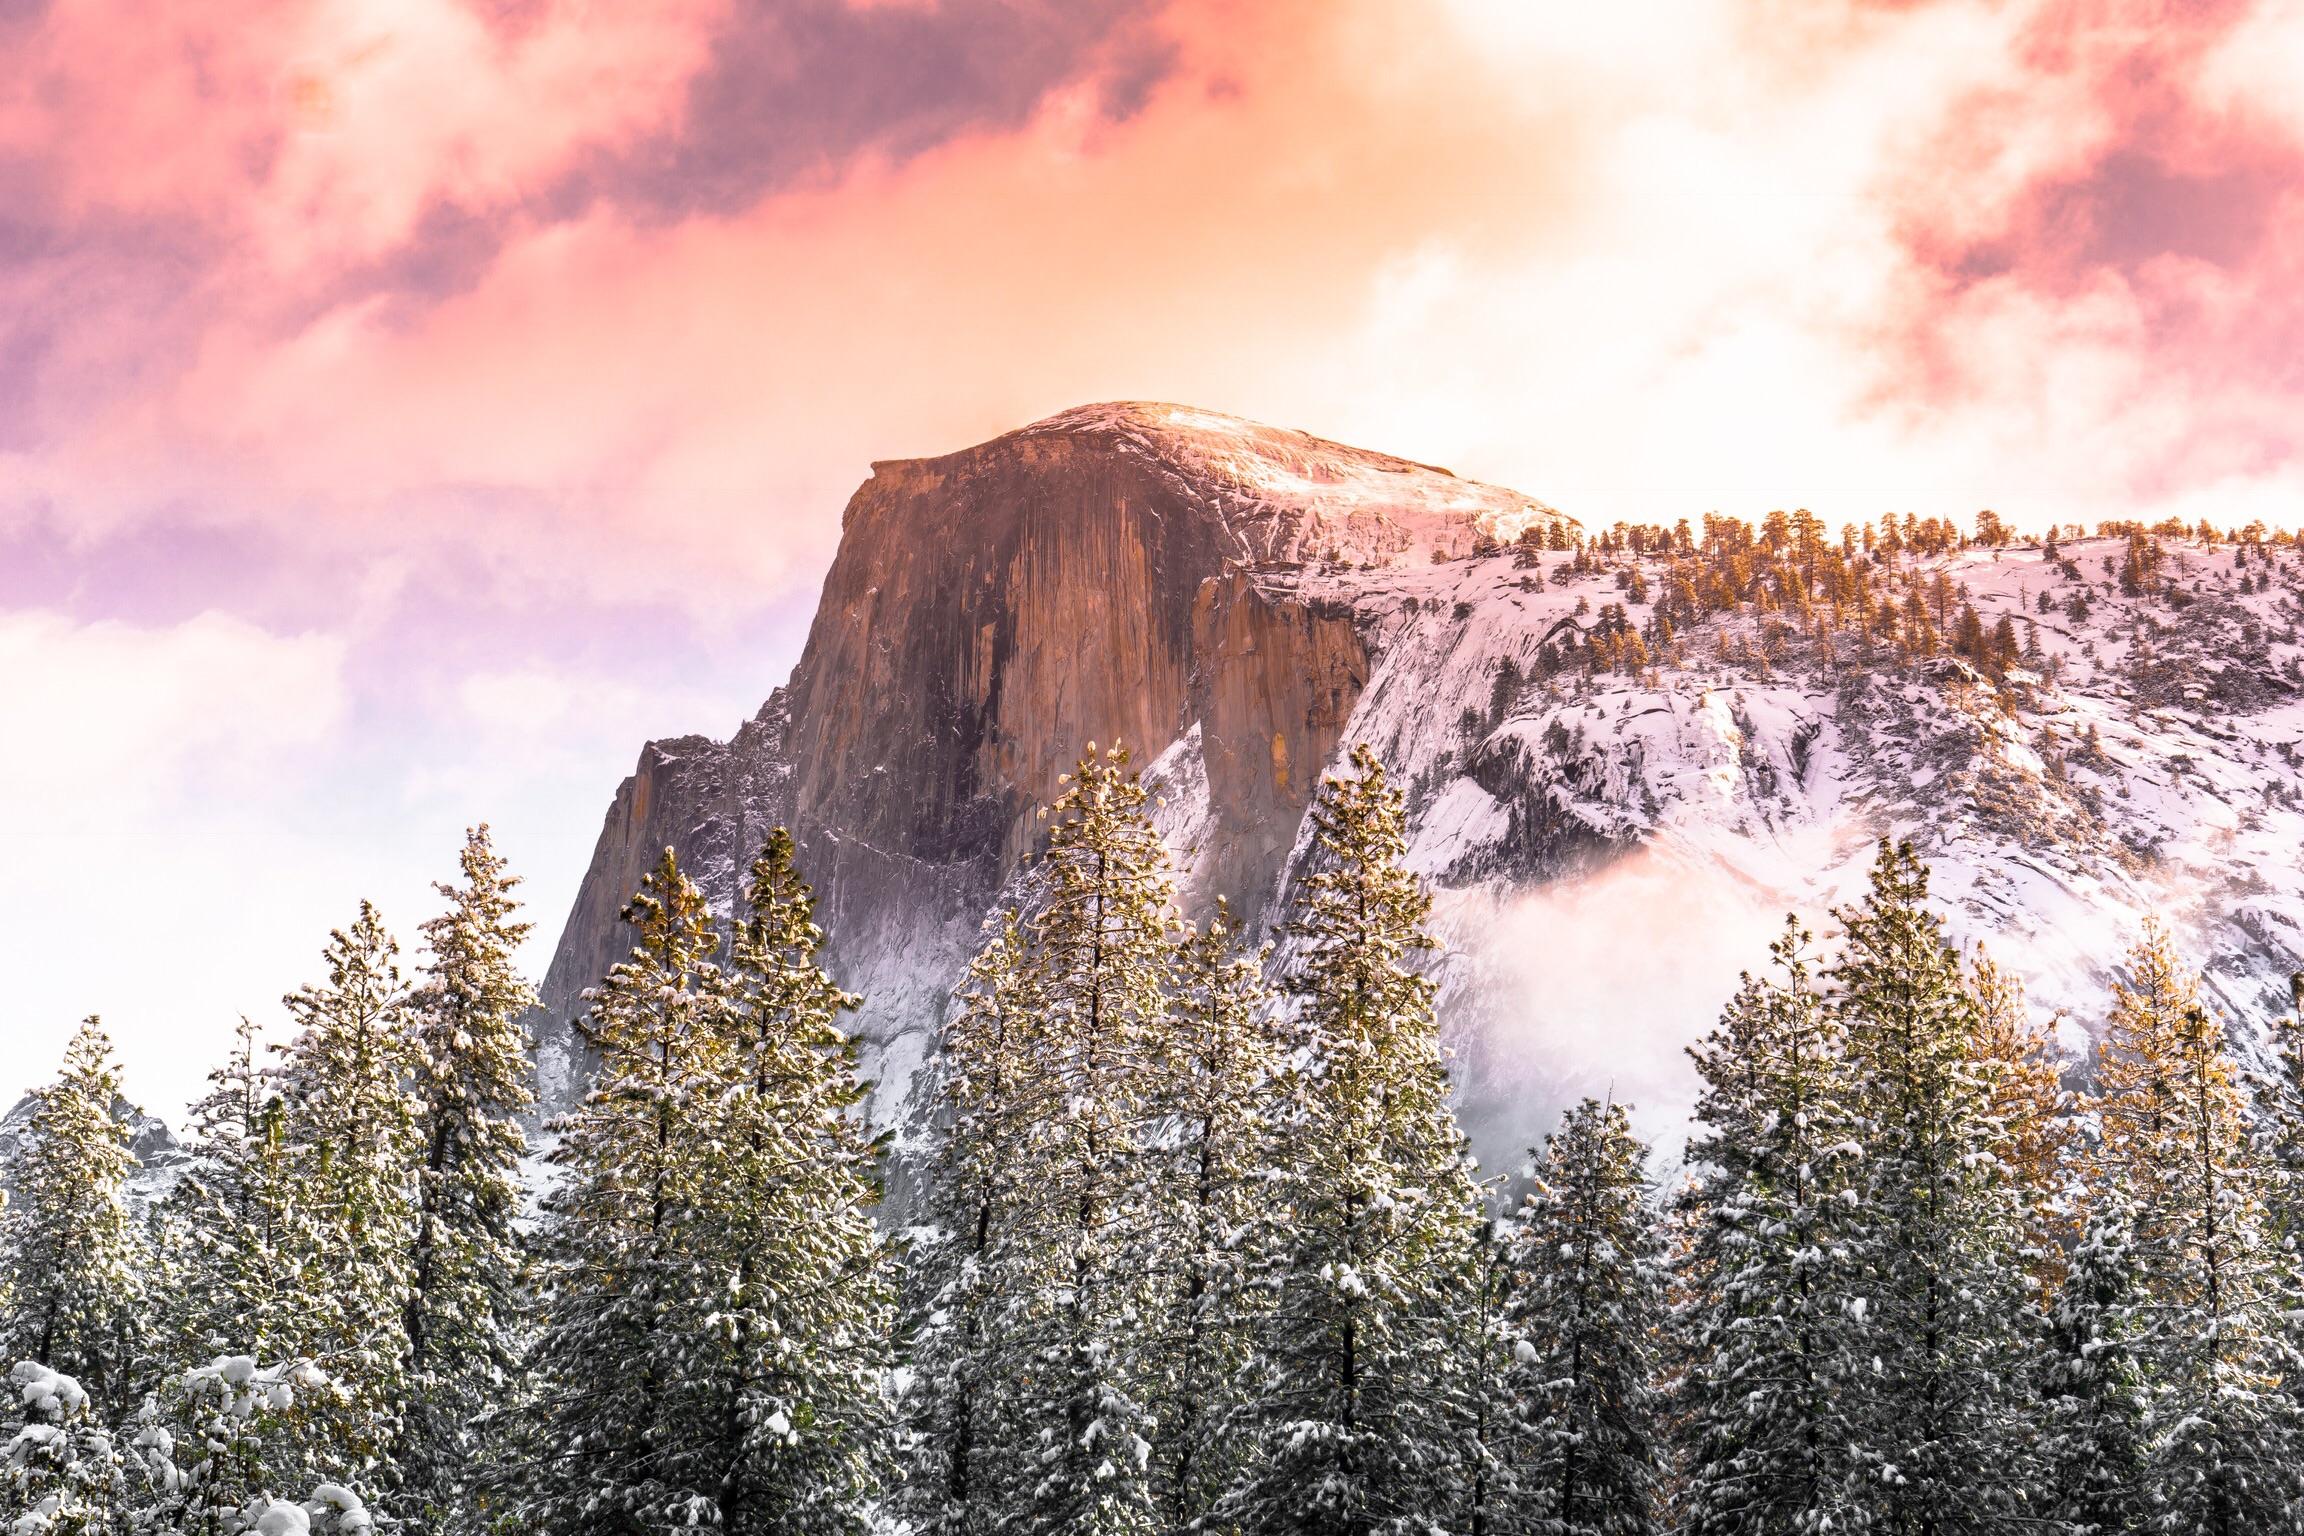 Reminded Me Of The Apple Desktop Wallpaper Half Dome Yosemite